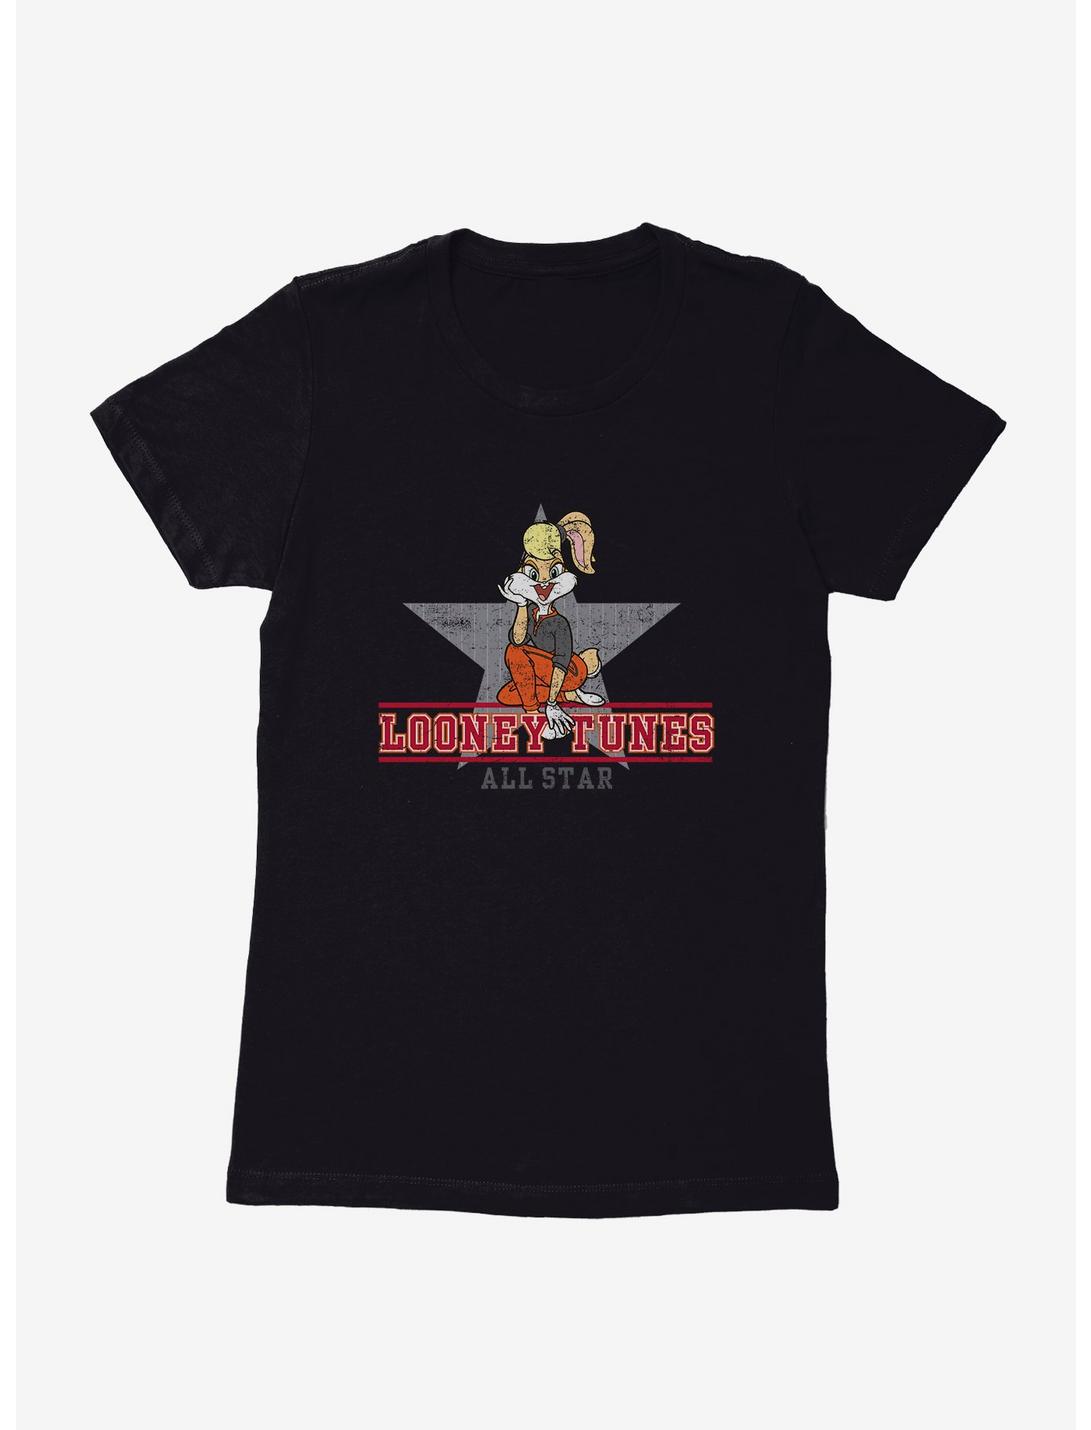 Looney Tunes Lola Bunny All Star Womens T-Shirt, BLACK, hi-res